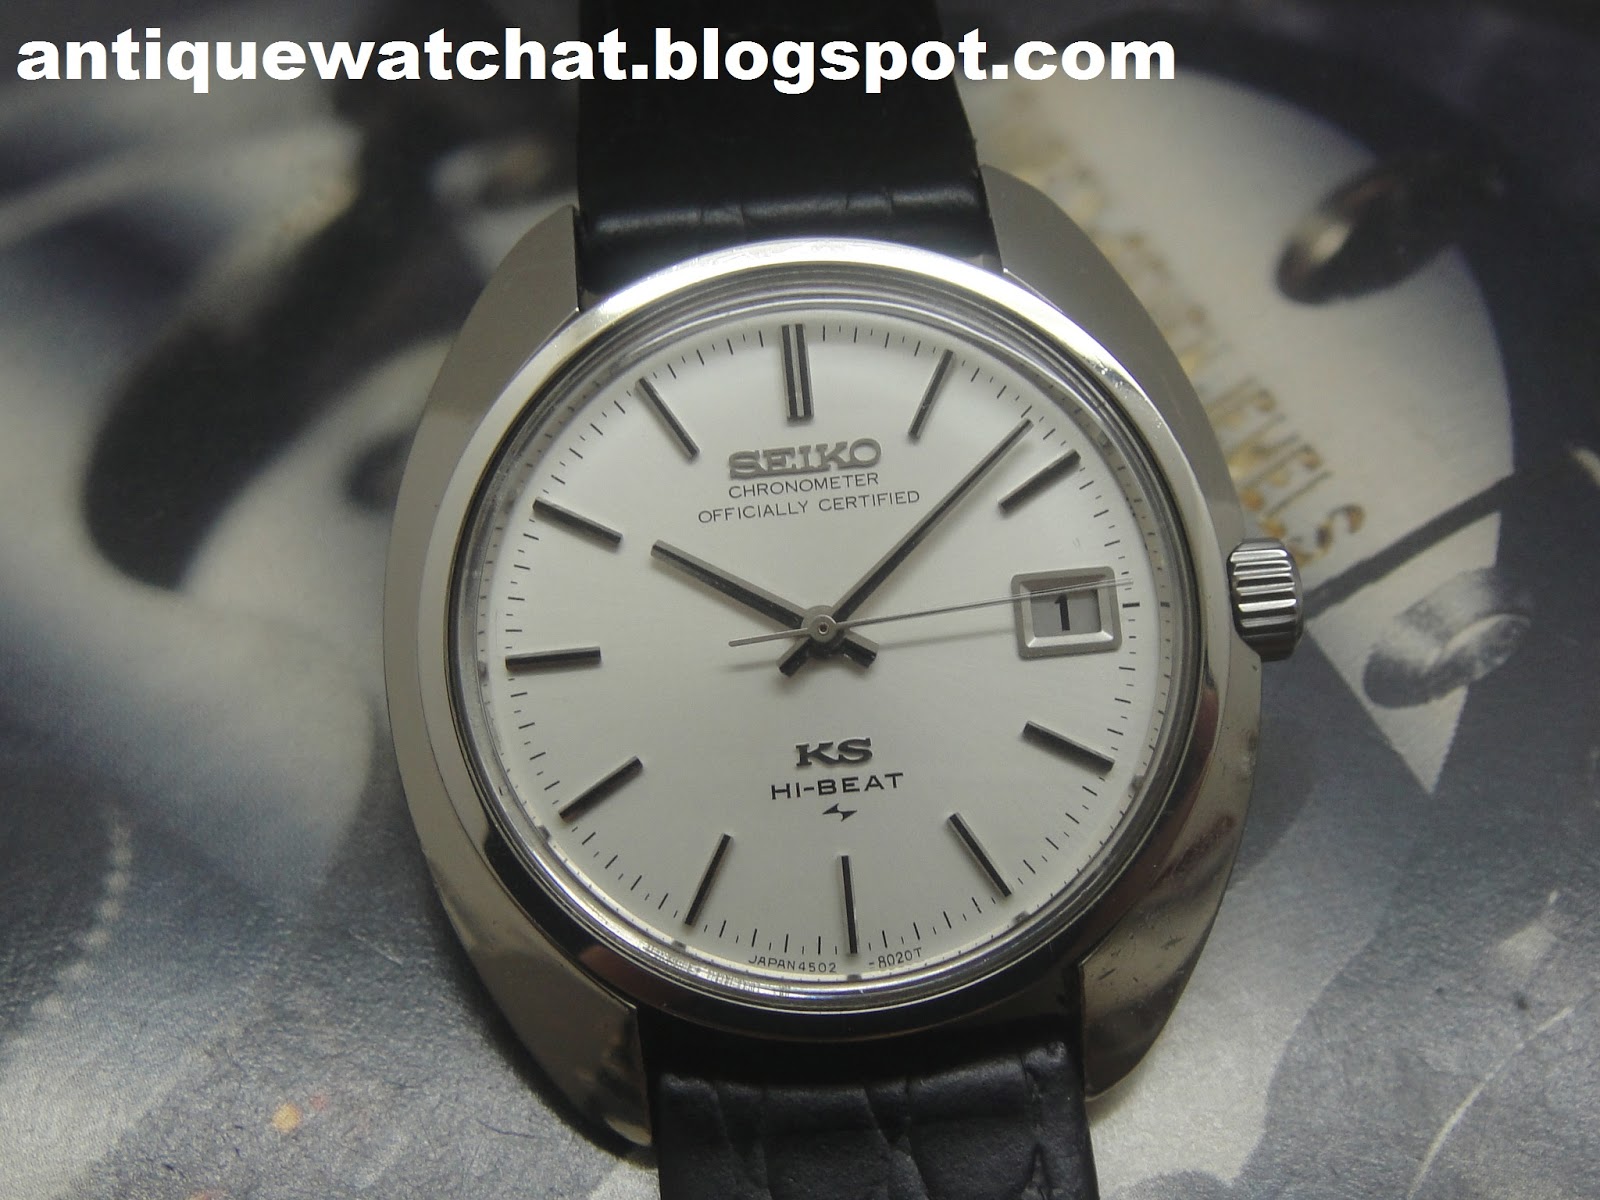 Antique Watch Bar: KING SEIKO CHRONOMETER 36000 HI-BEAT 4502-8010 KS183  (SOLD)